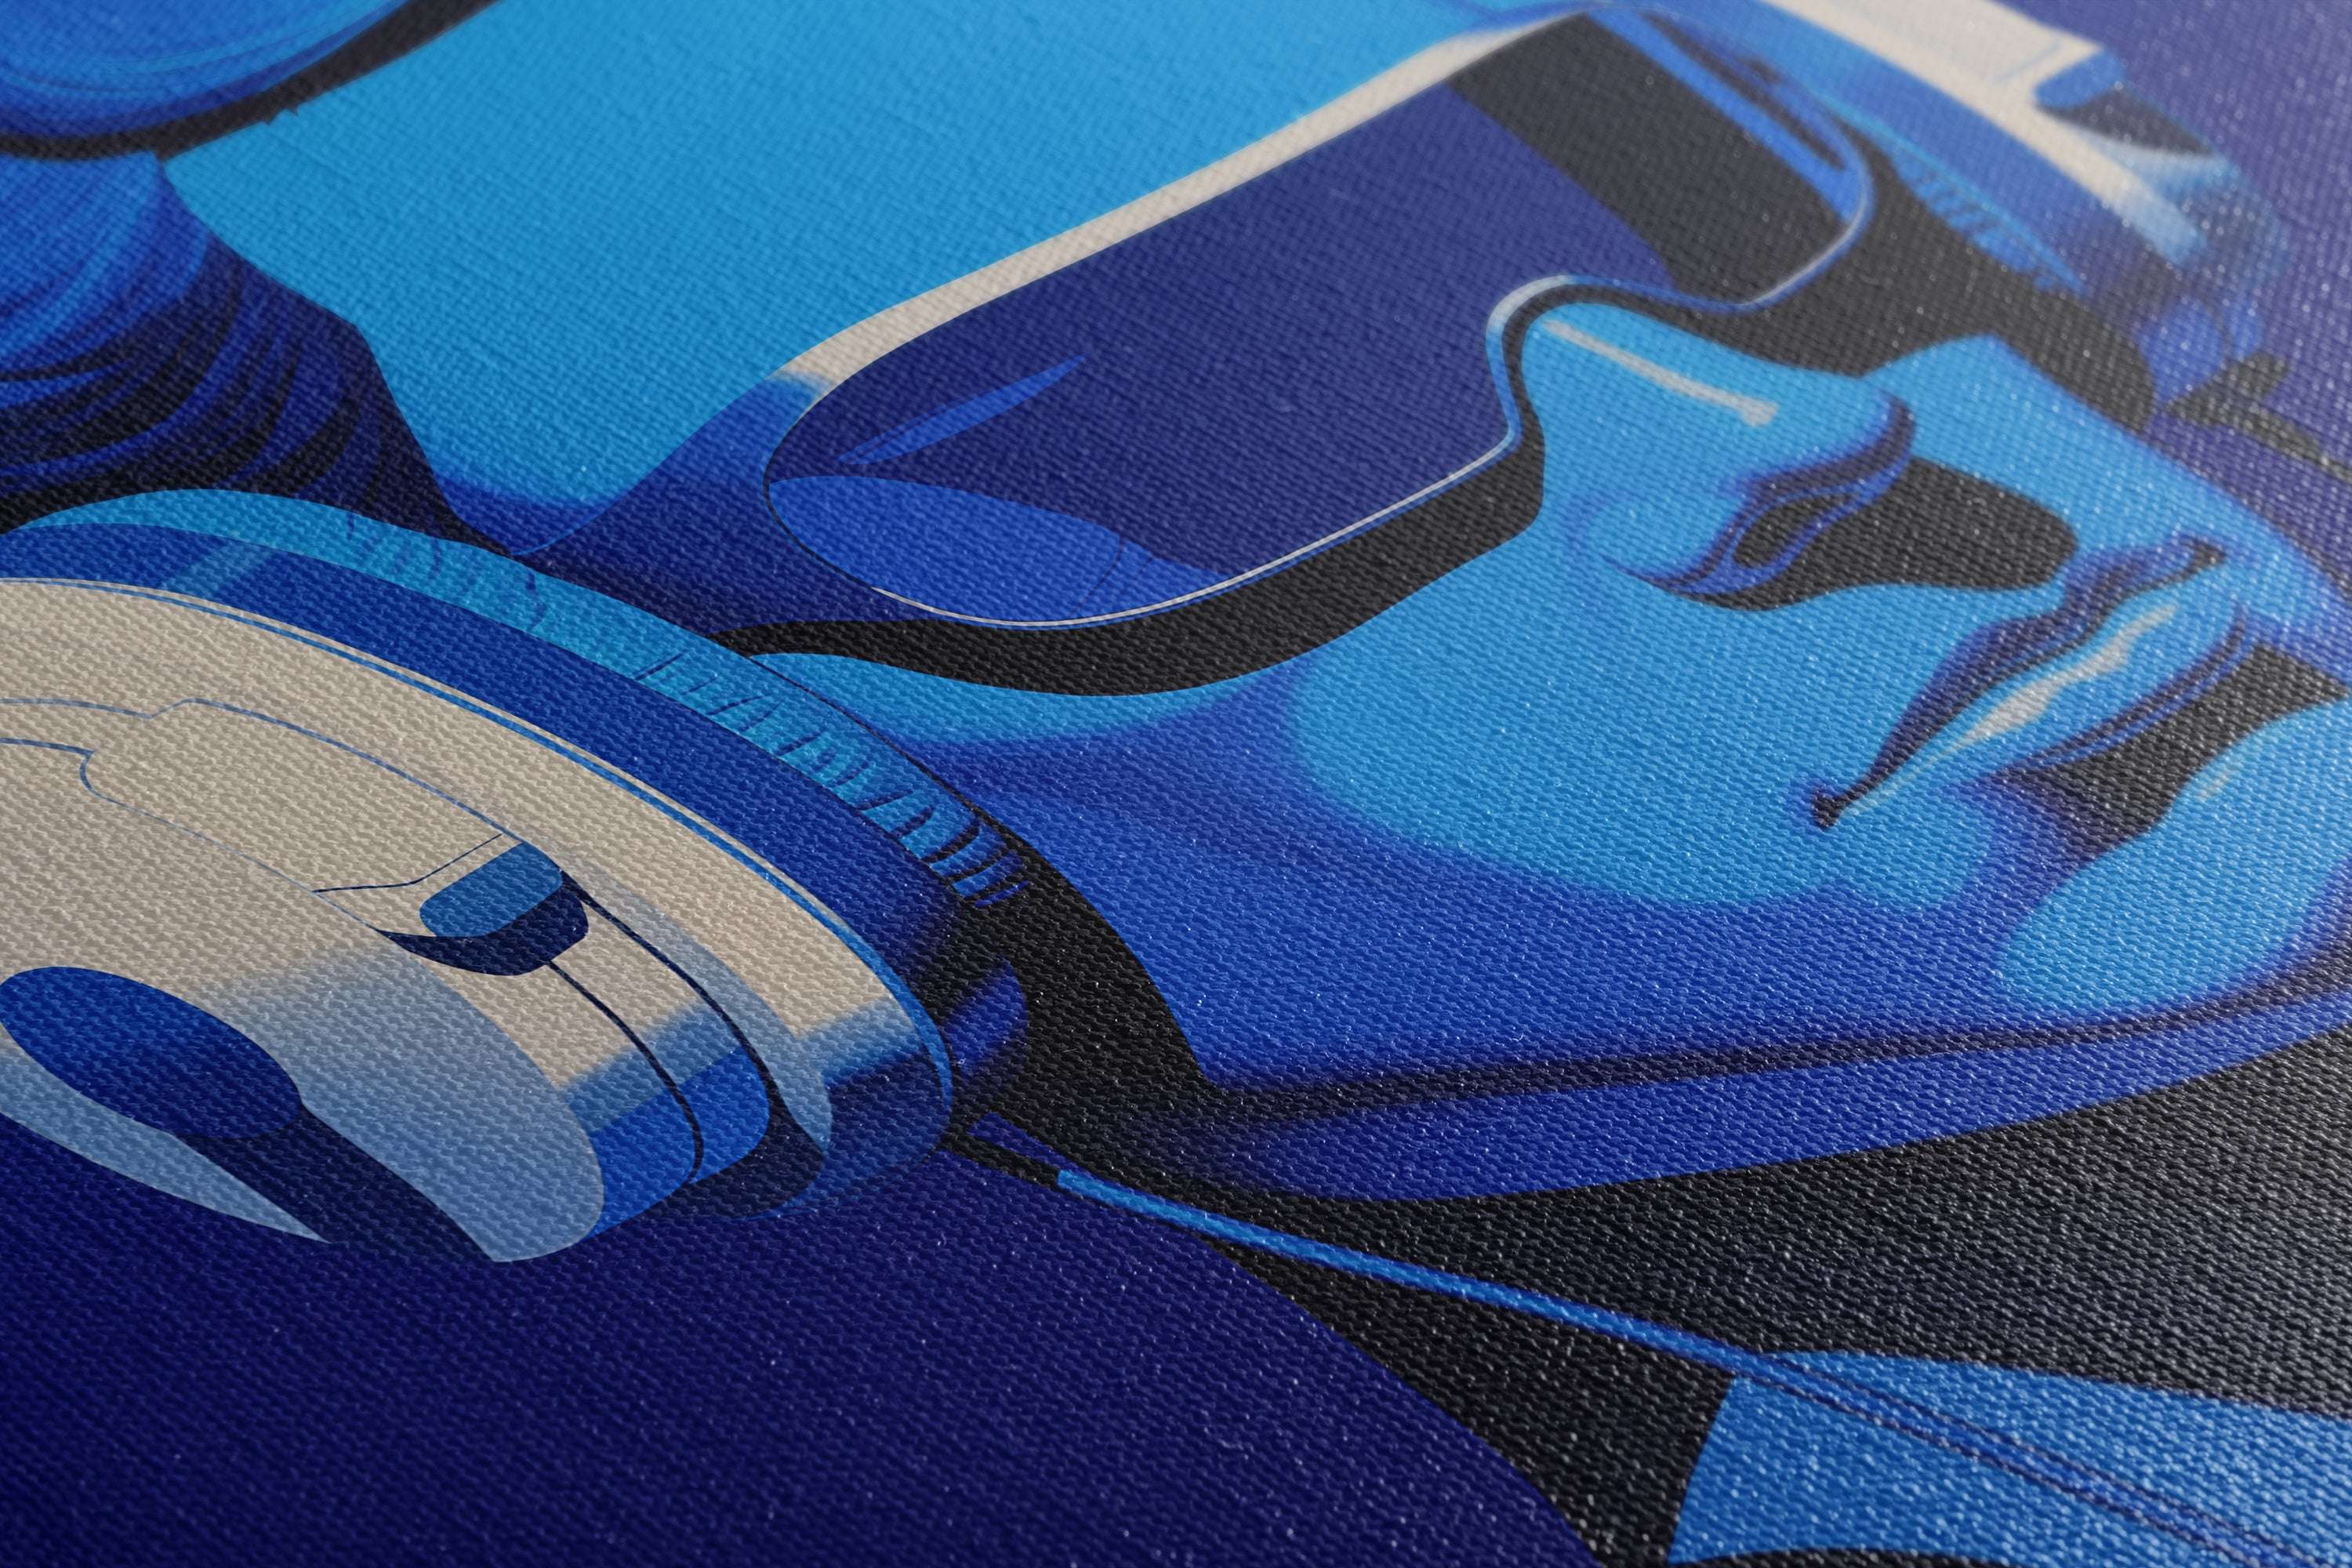 Surreal Figure in Headphones on Blue - Canvas Print - Artoholica Ready to Hang Canvas Print